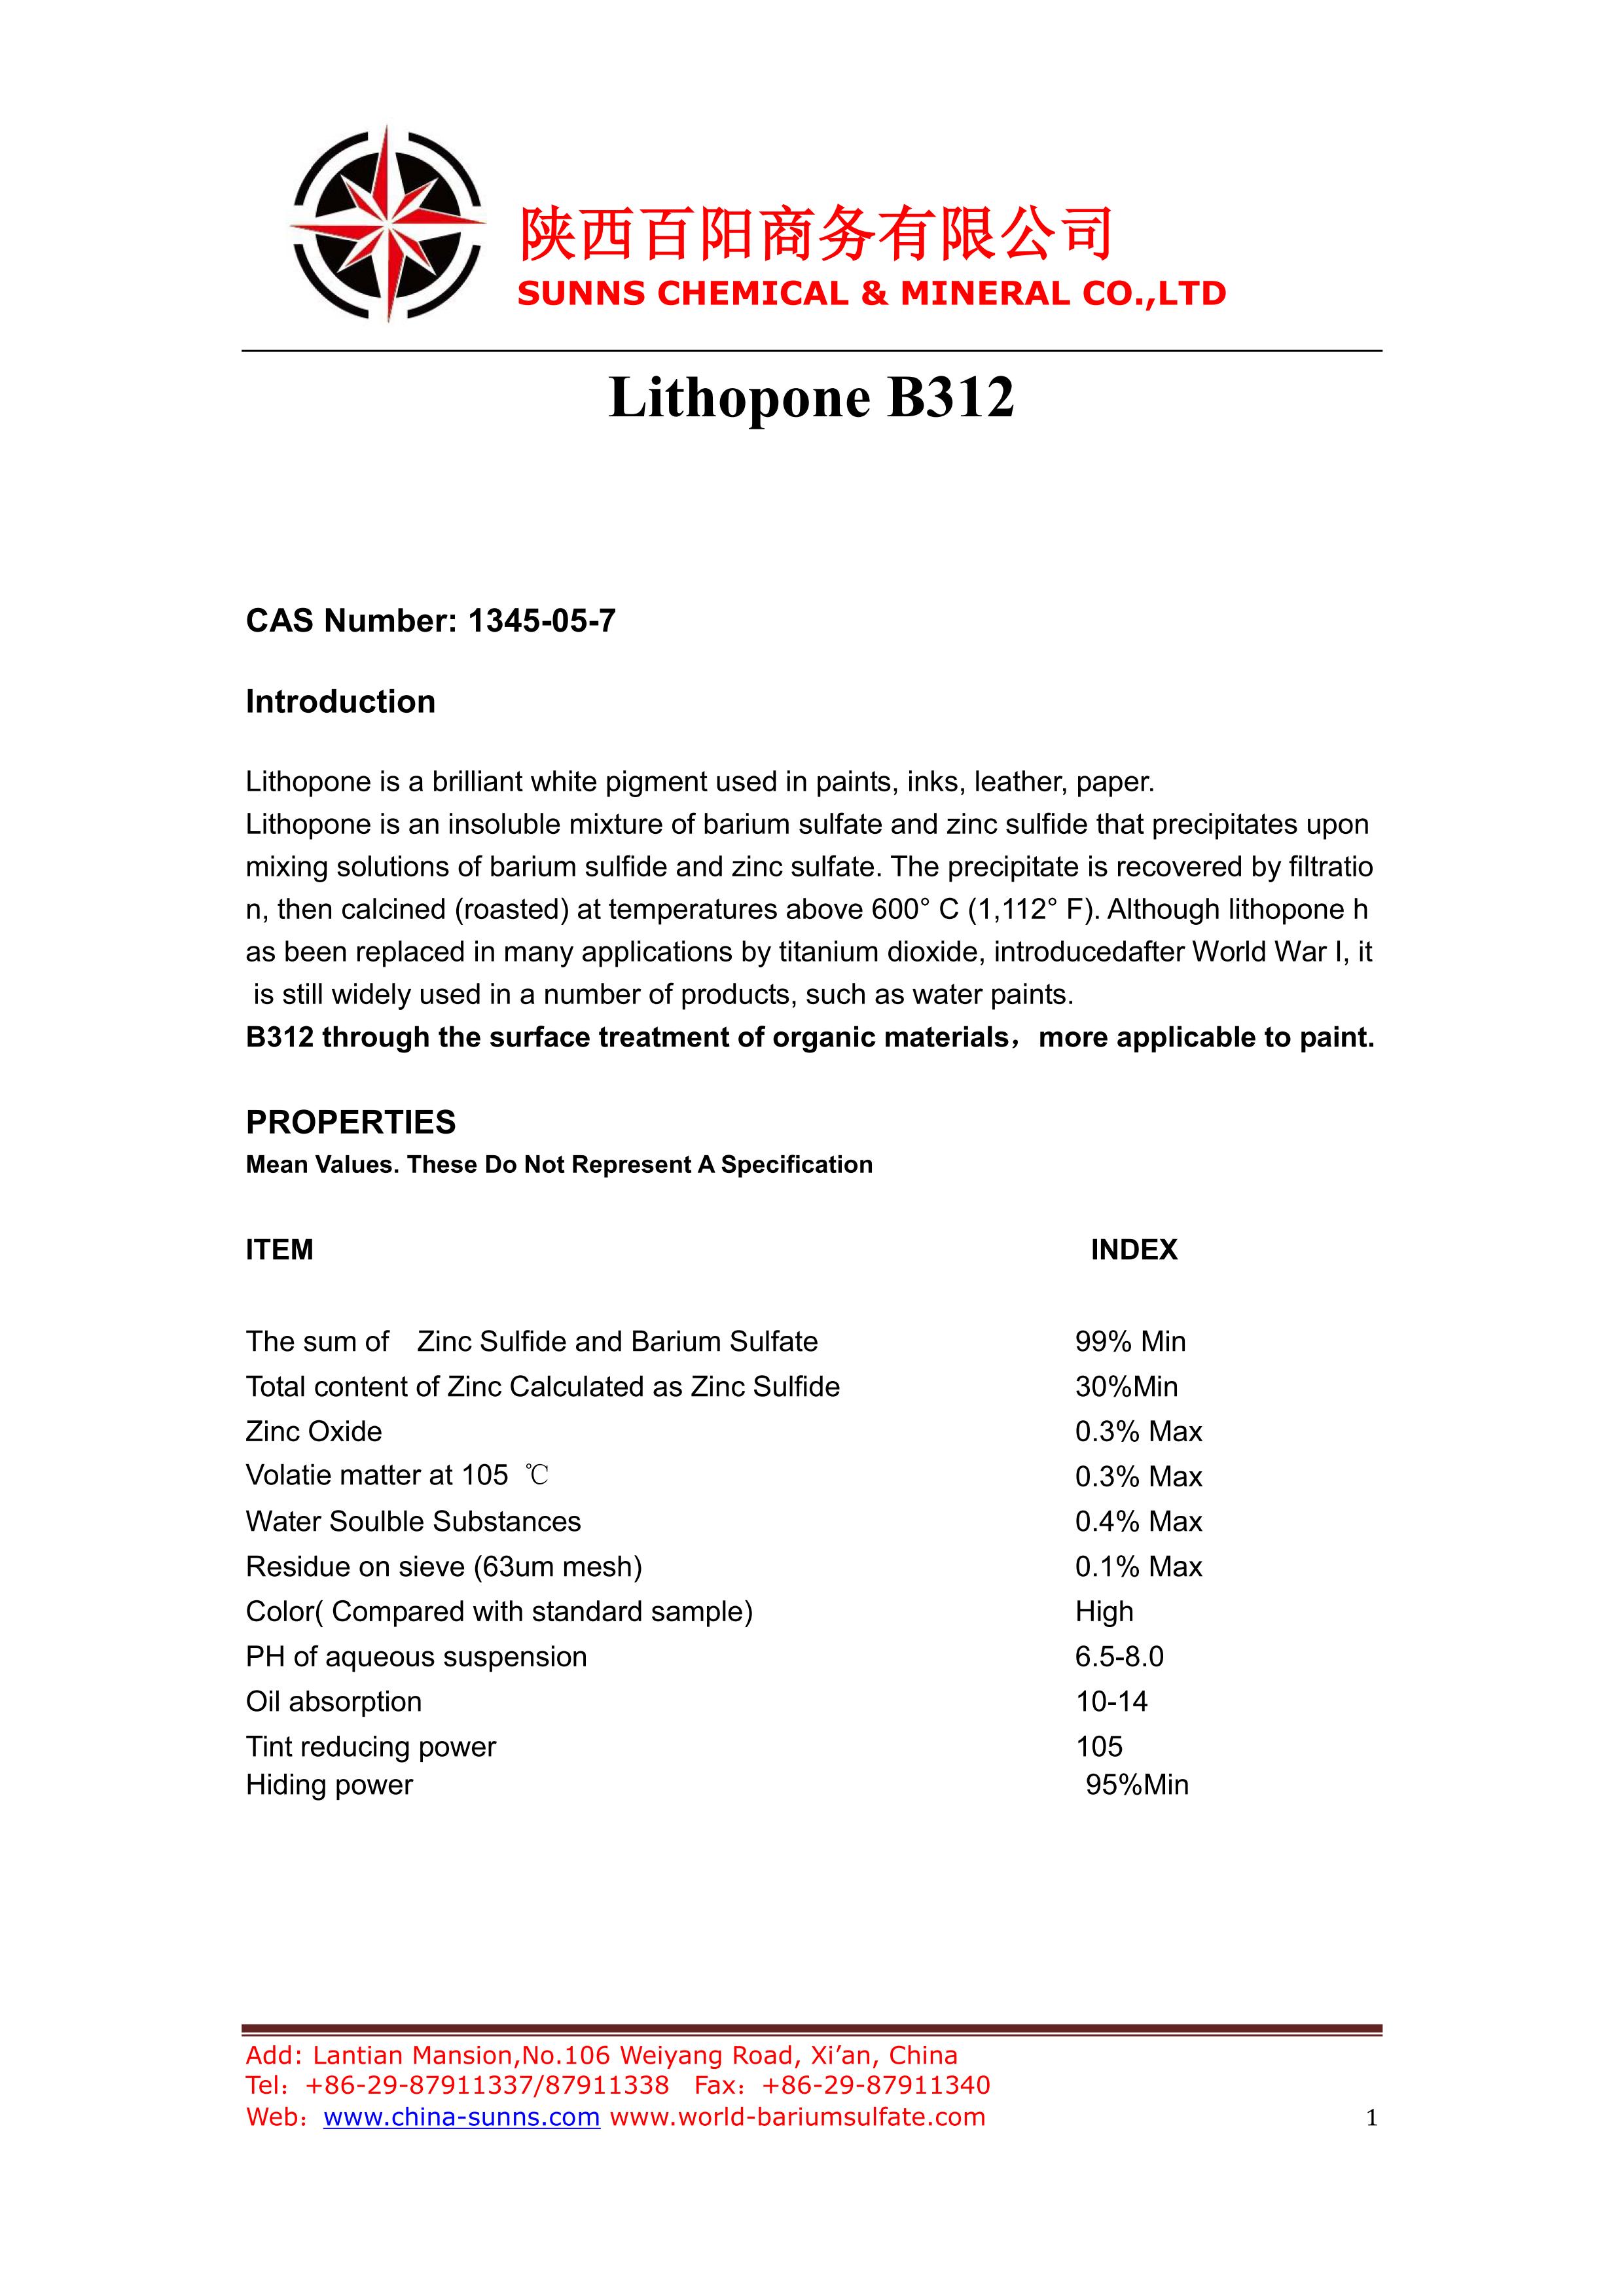 Lithopone B-312